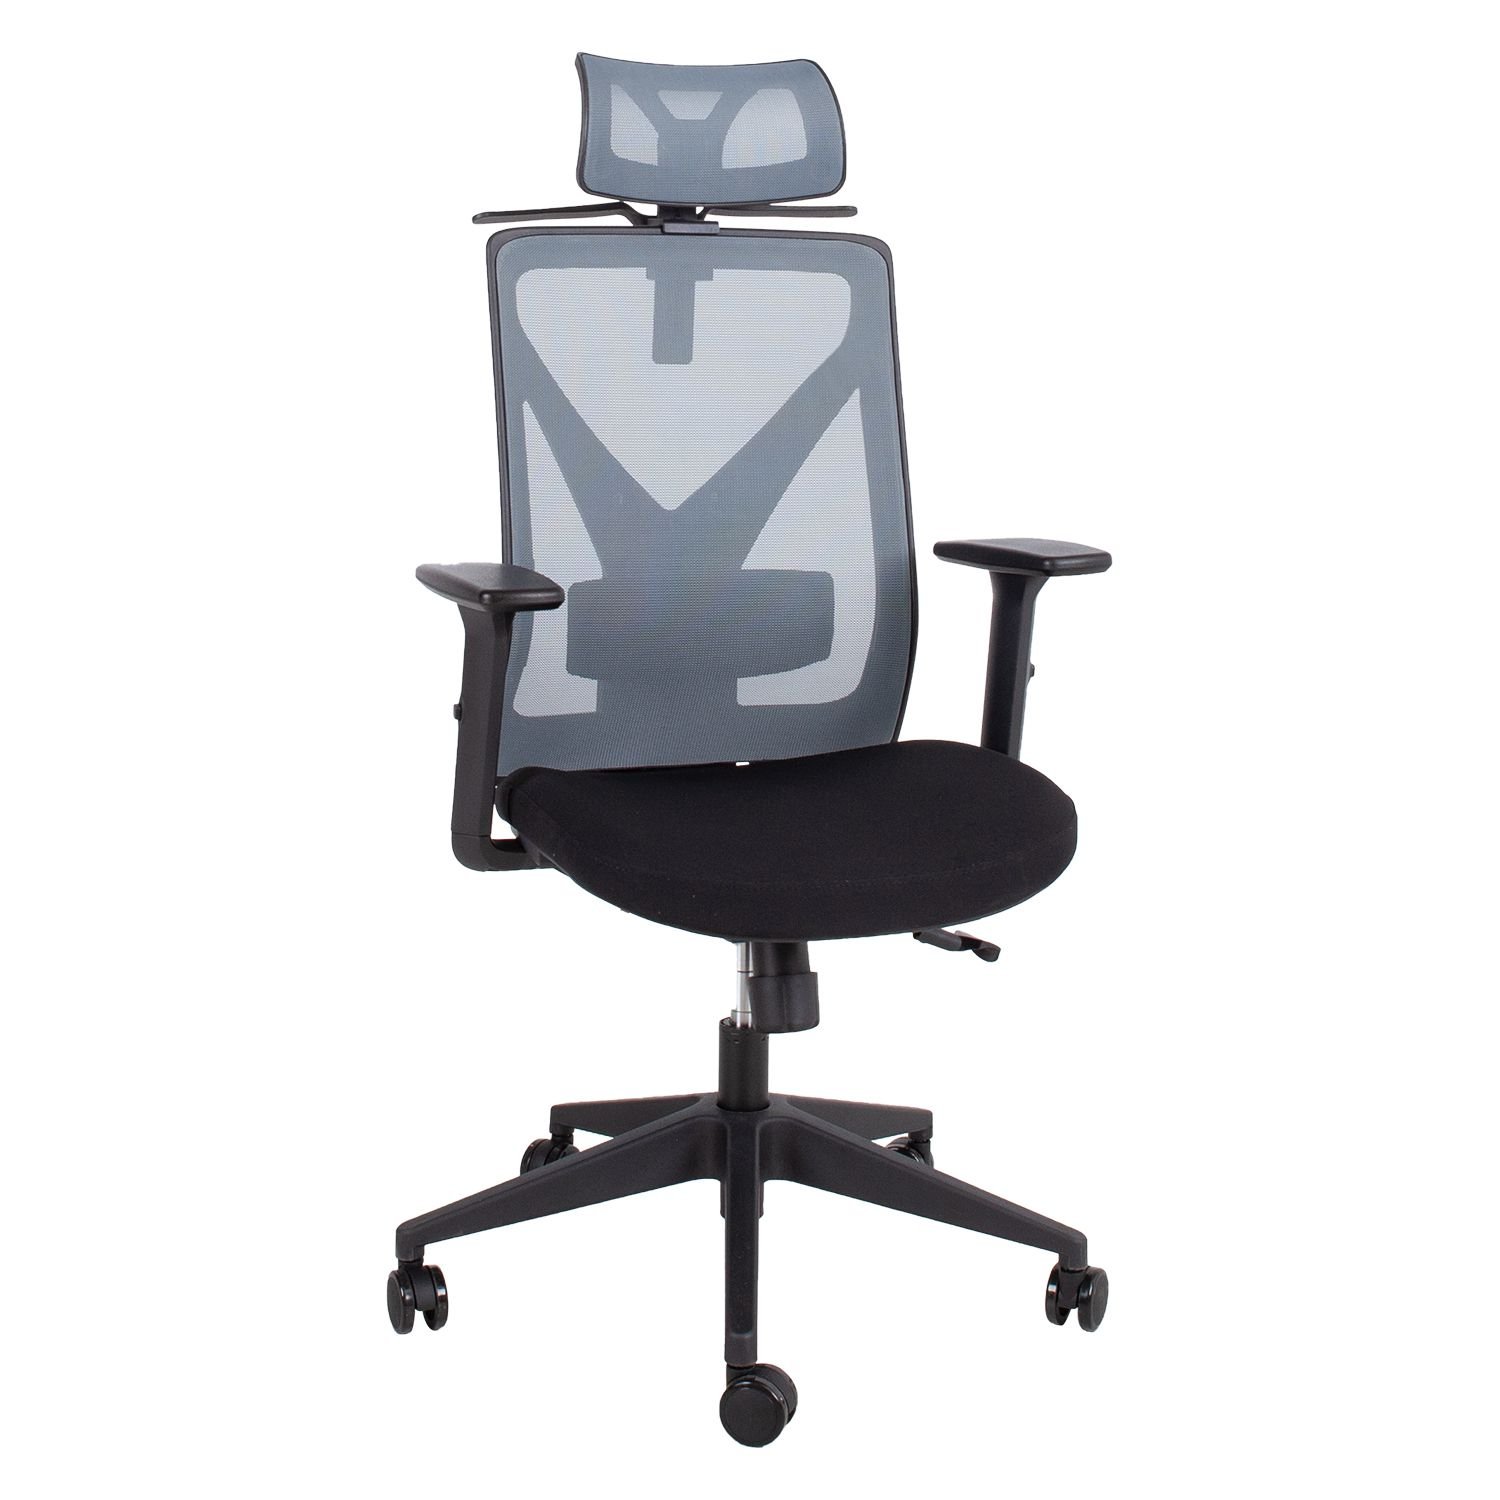 Biuro kėdė MIKE, 64x65x110-120cm,  juoda/pilka